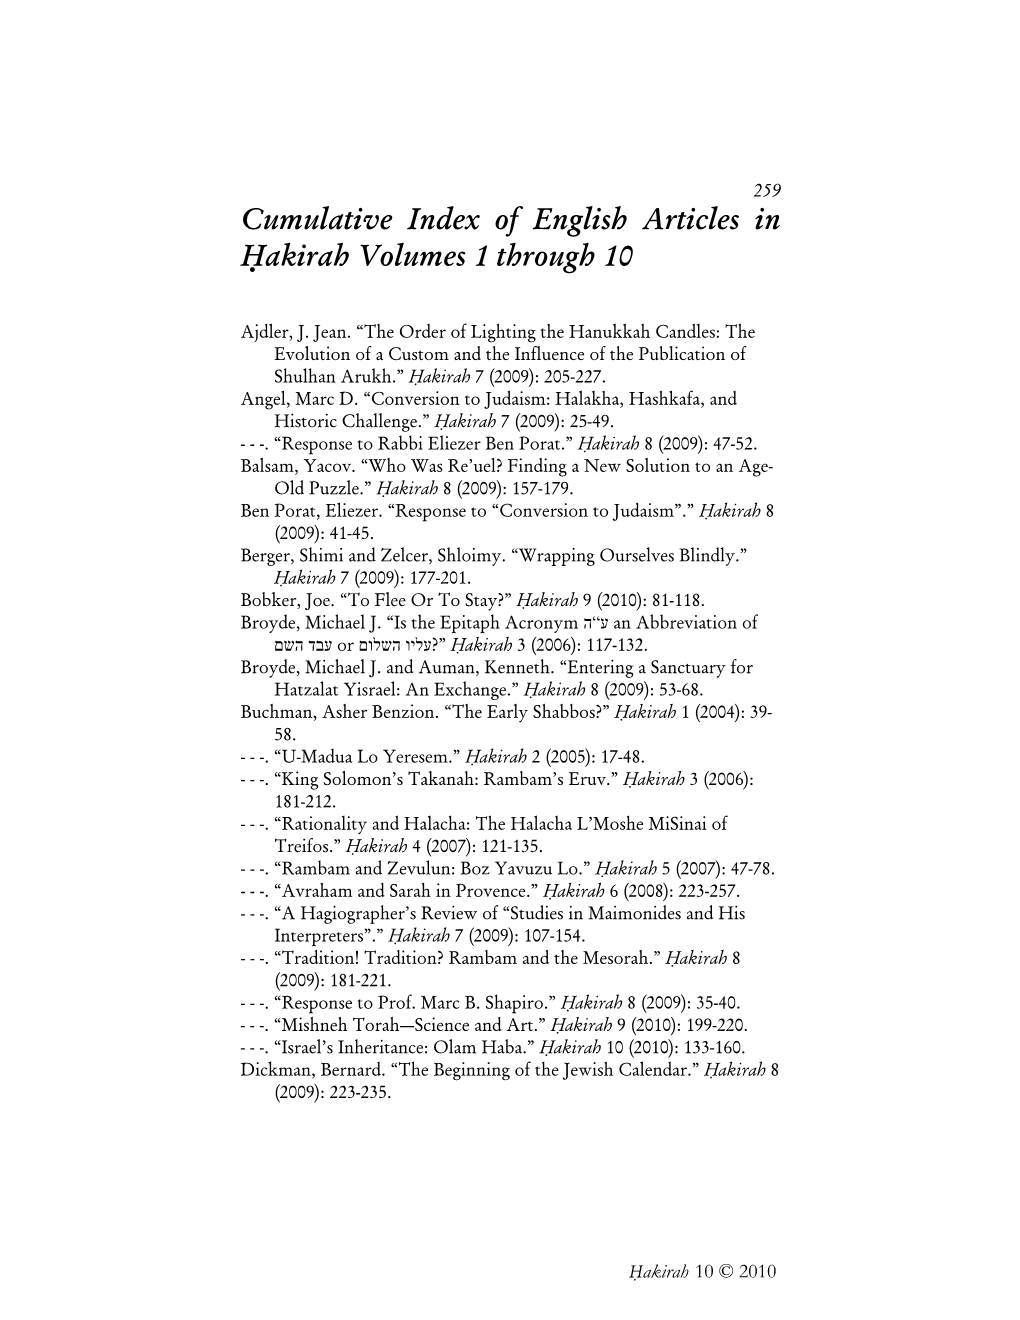 Cumulative Index of English Articles in Hakirah Volumes 1 Through 10